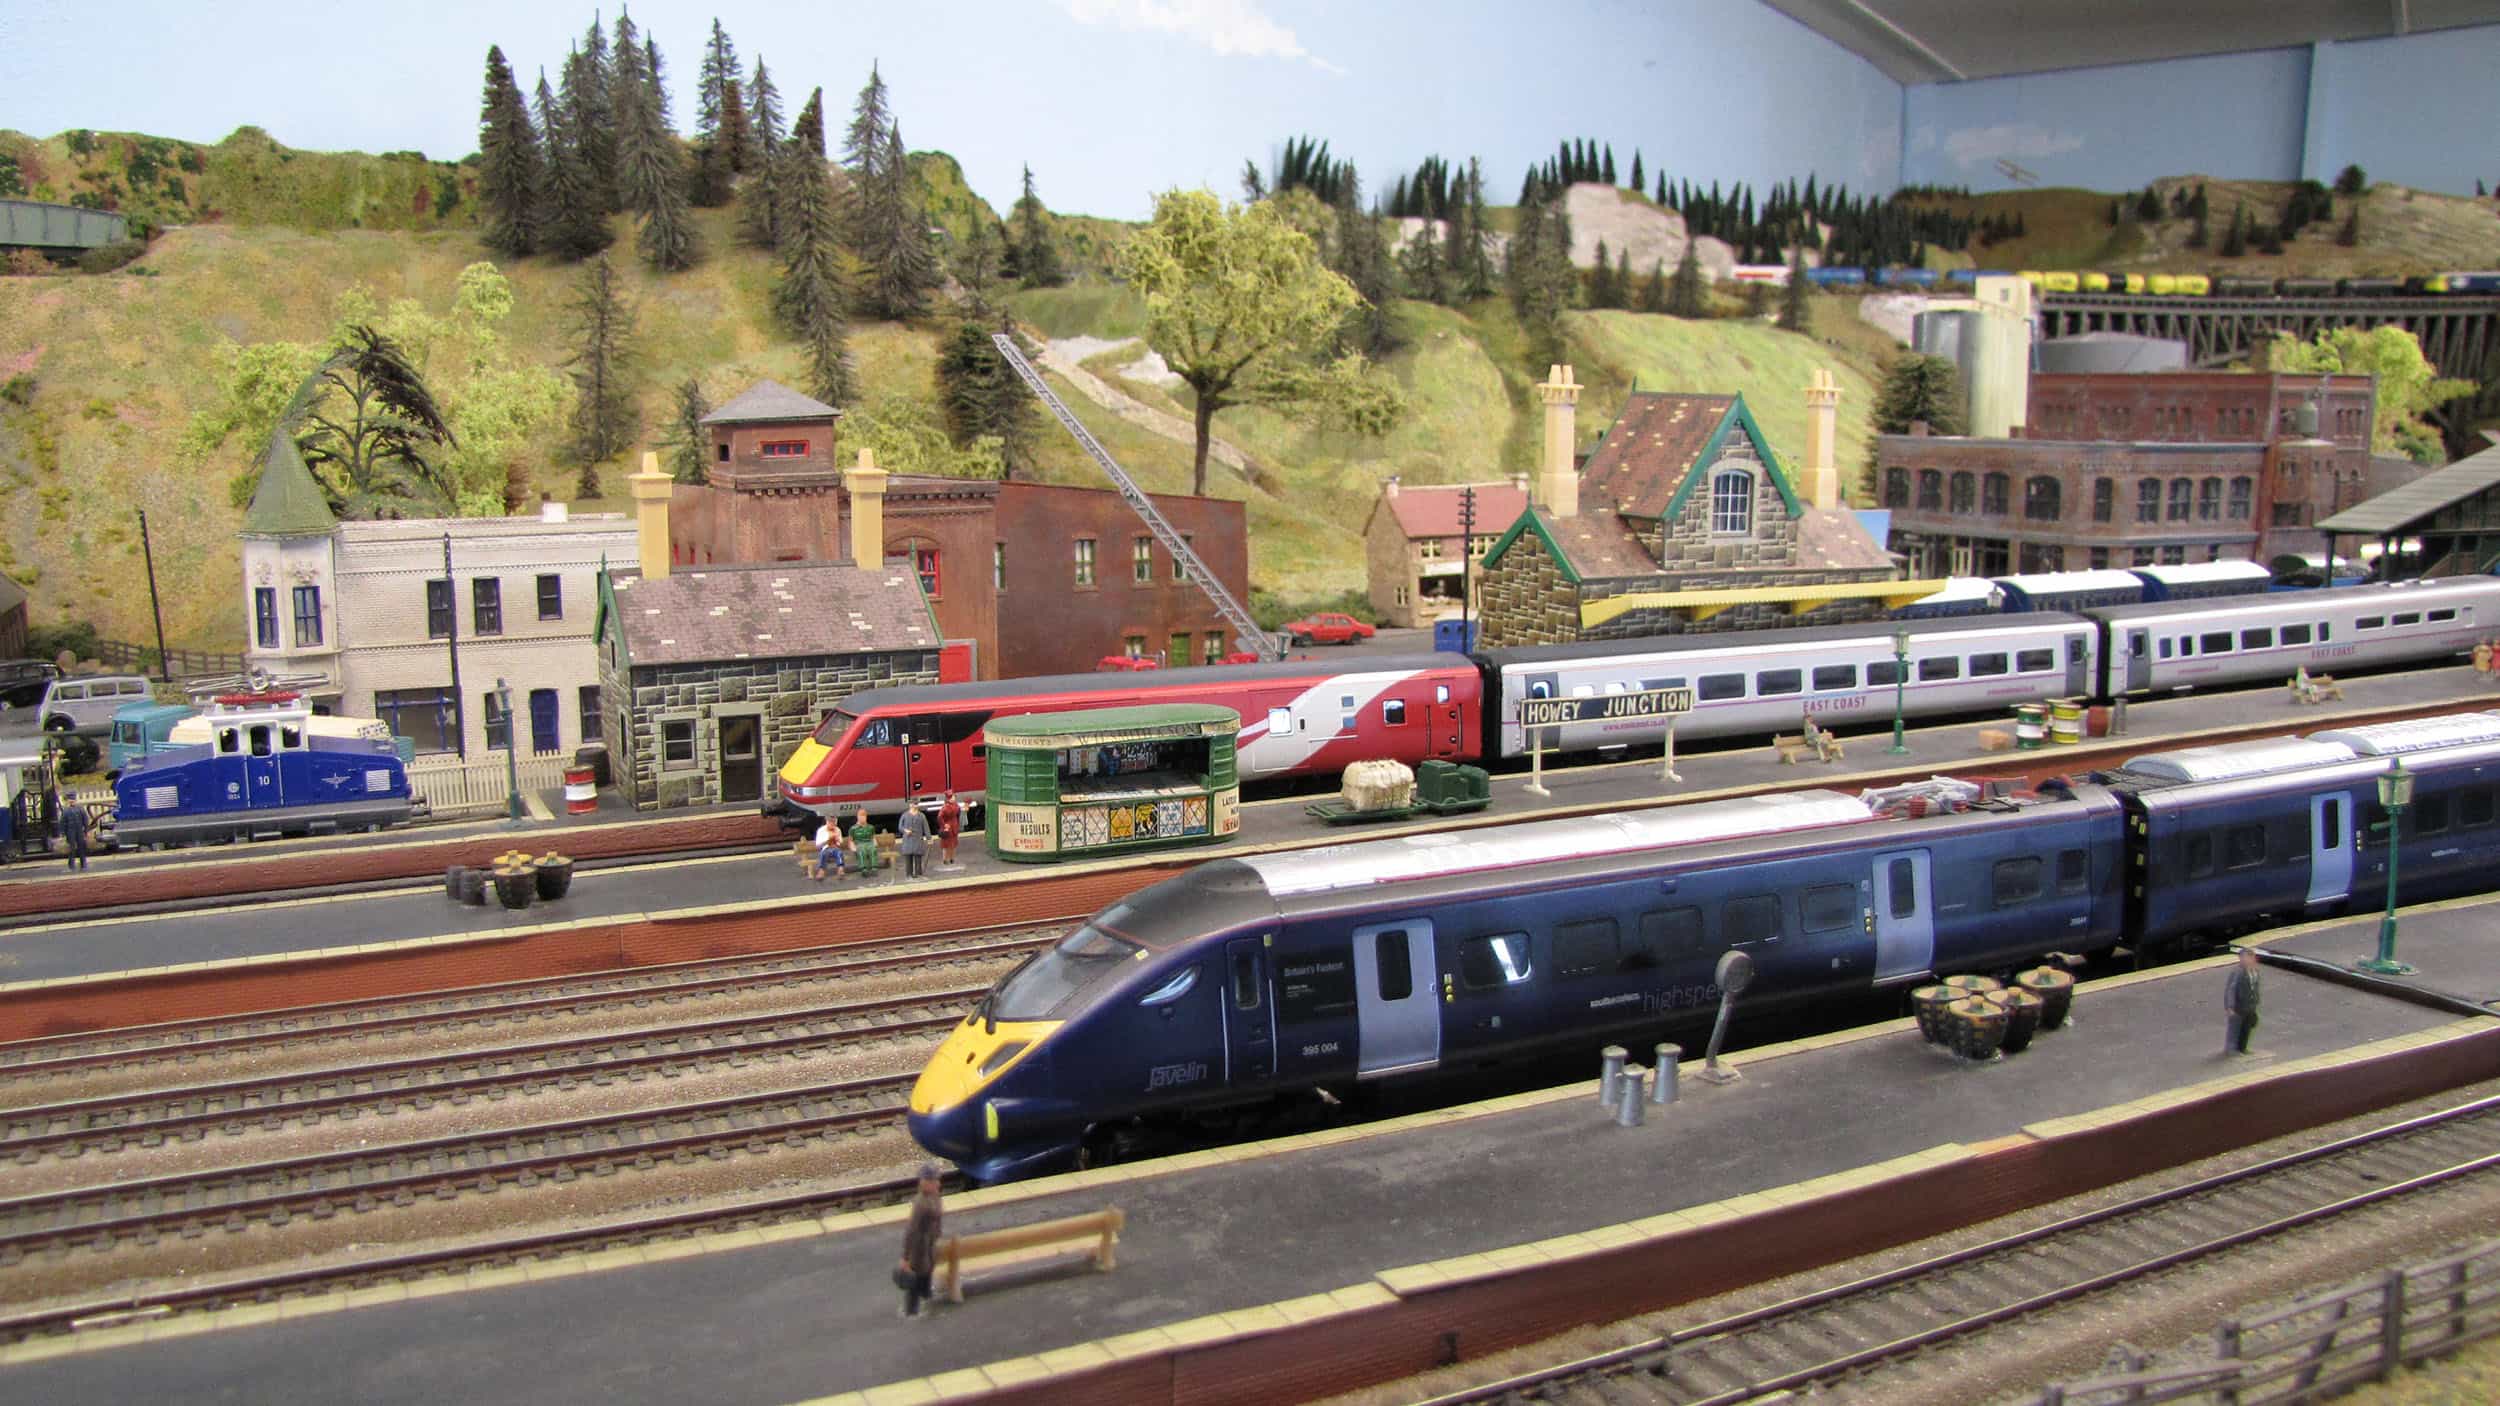 The model railway exhibition at Romney, Hythe & Dymchurch Railway